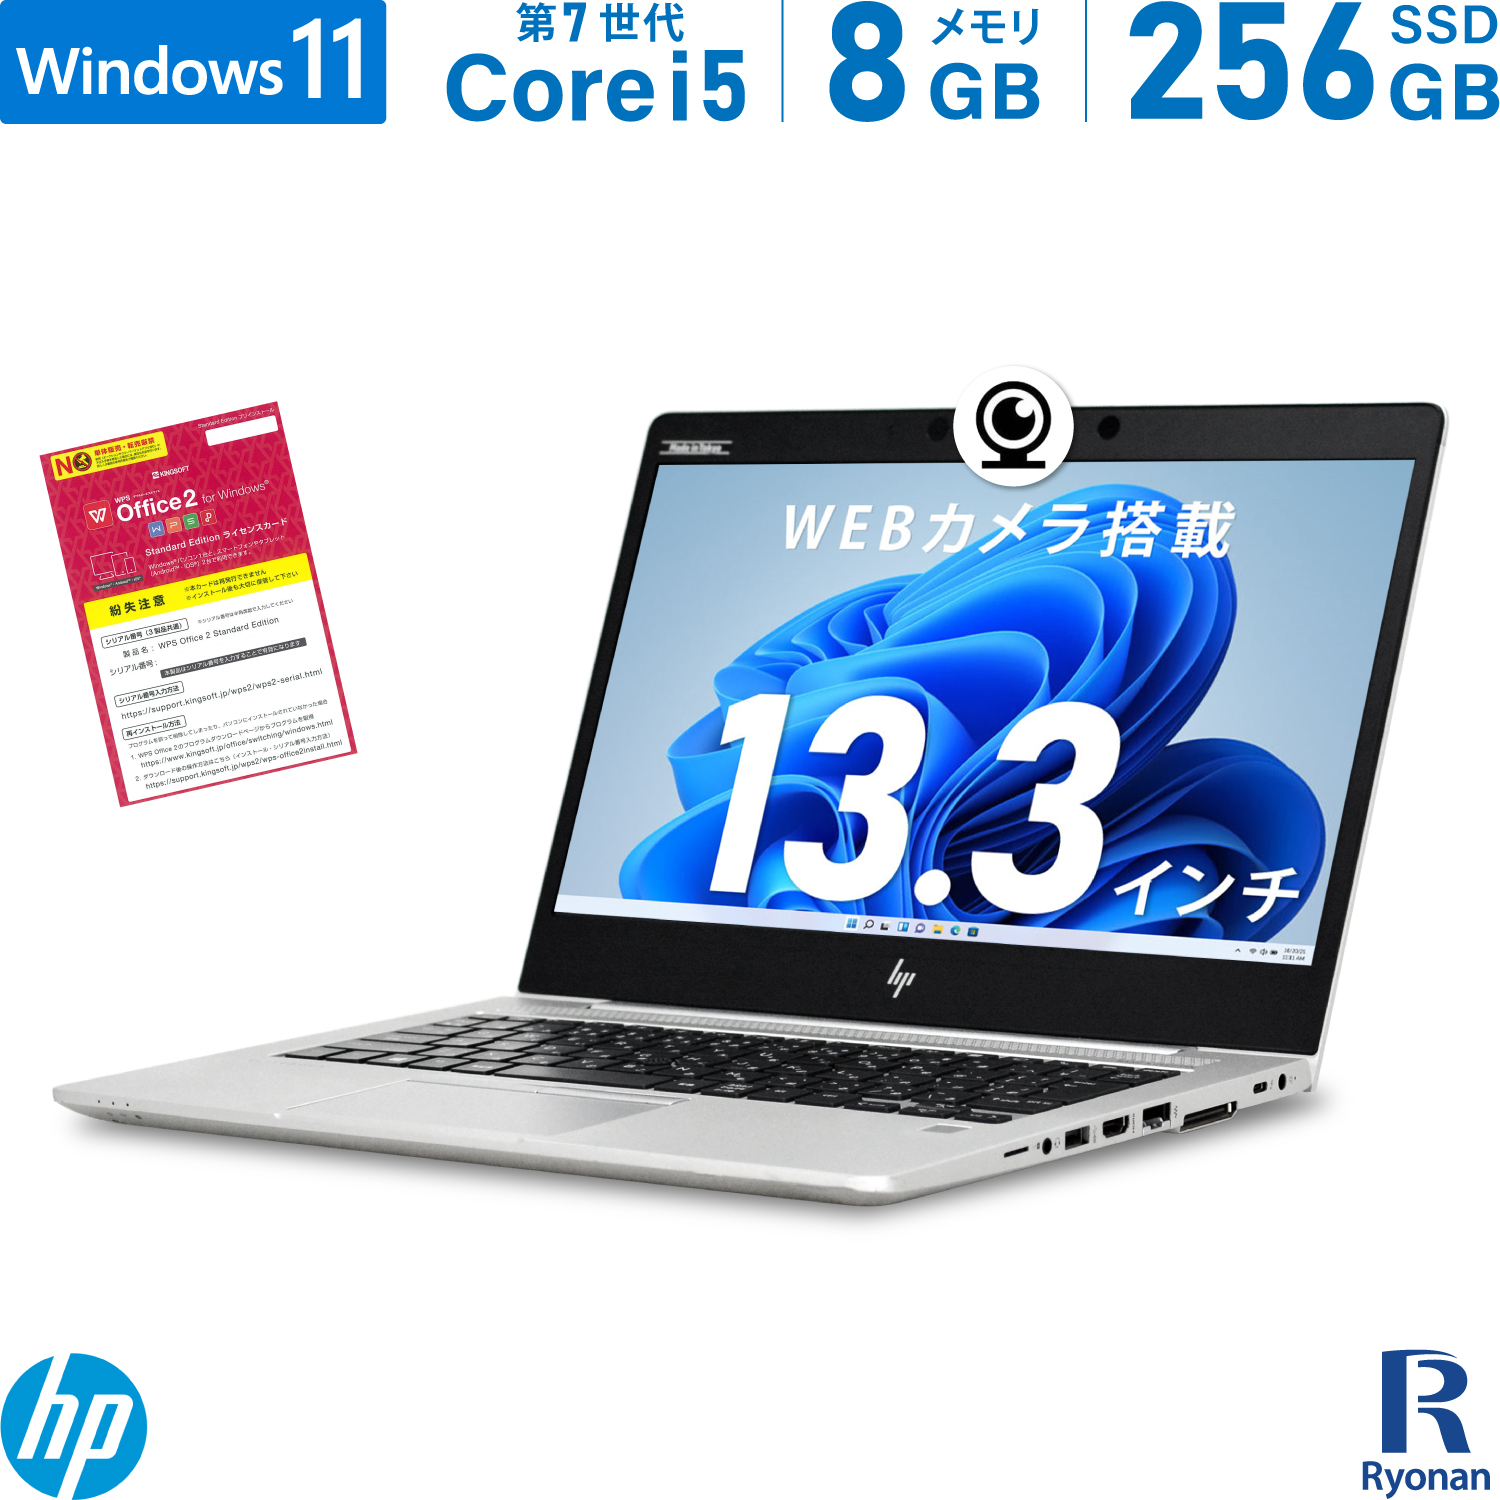 HP EliteBook メモリ8GB Core i5 SSD 256GB-